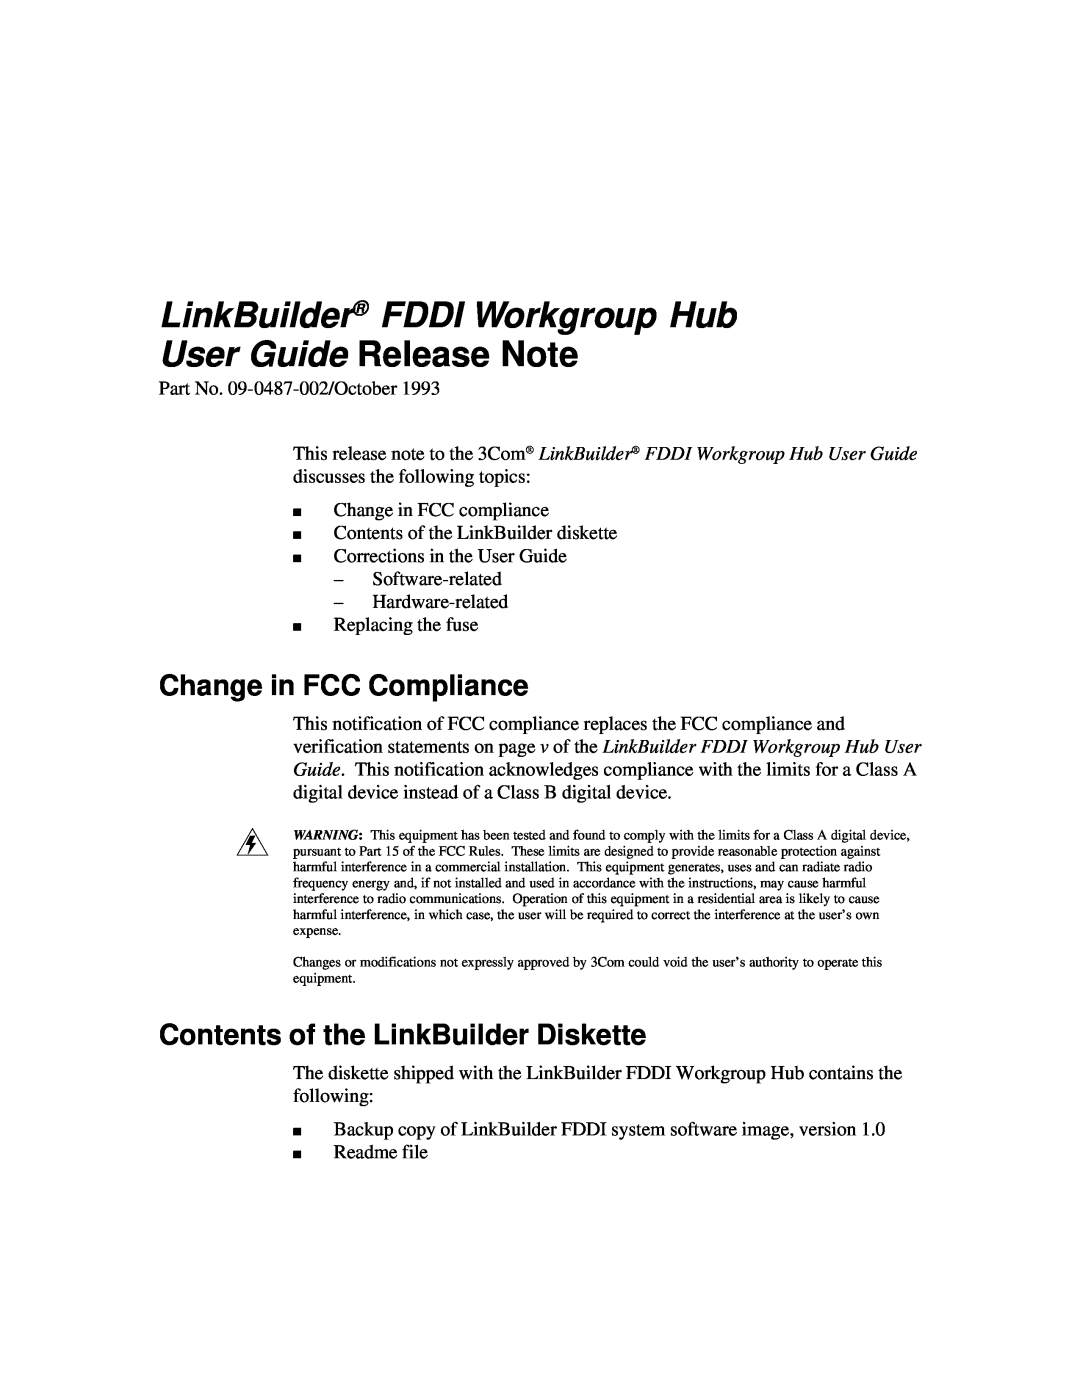 3Com 09-0487-002 manual Change in FCC Compliance, Contents of the LinkBuilder Diskette, LinkBuilder FDDI Workgroup Hub 